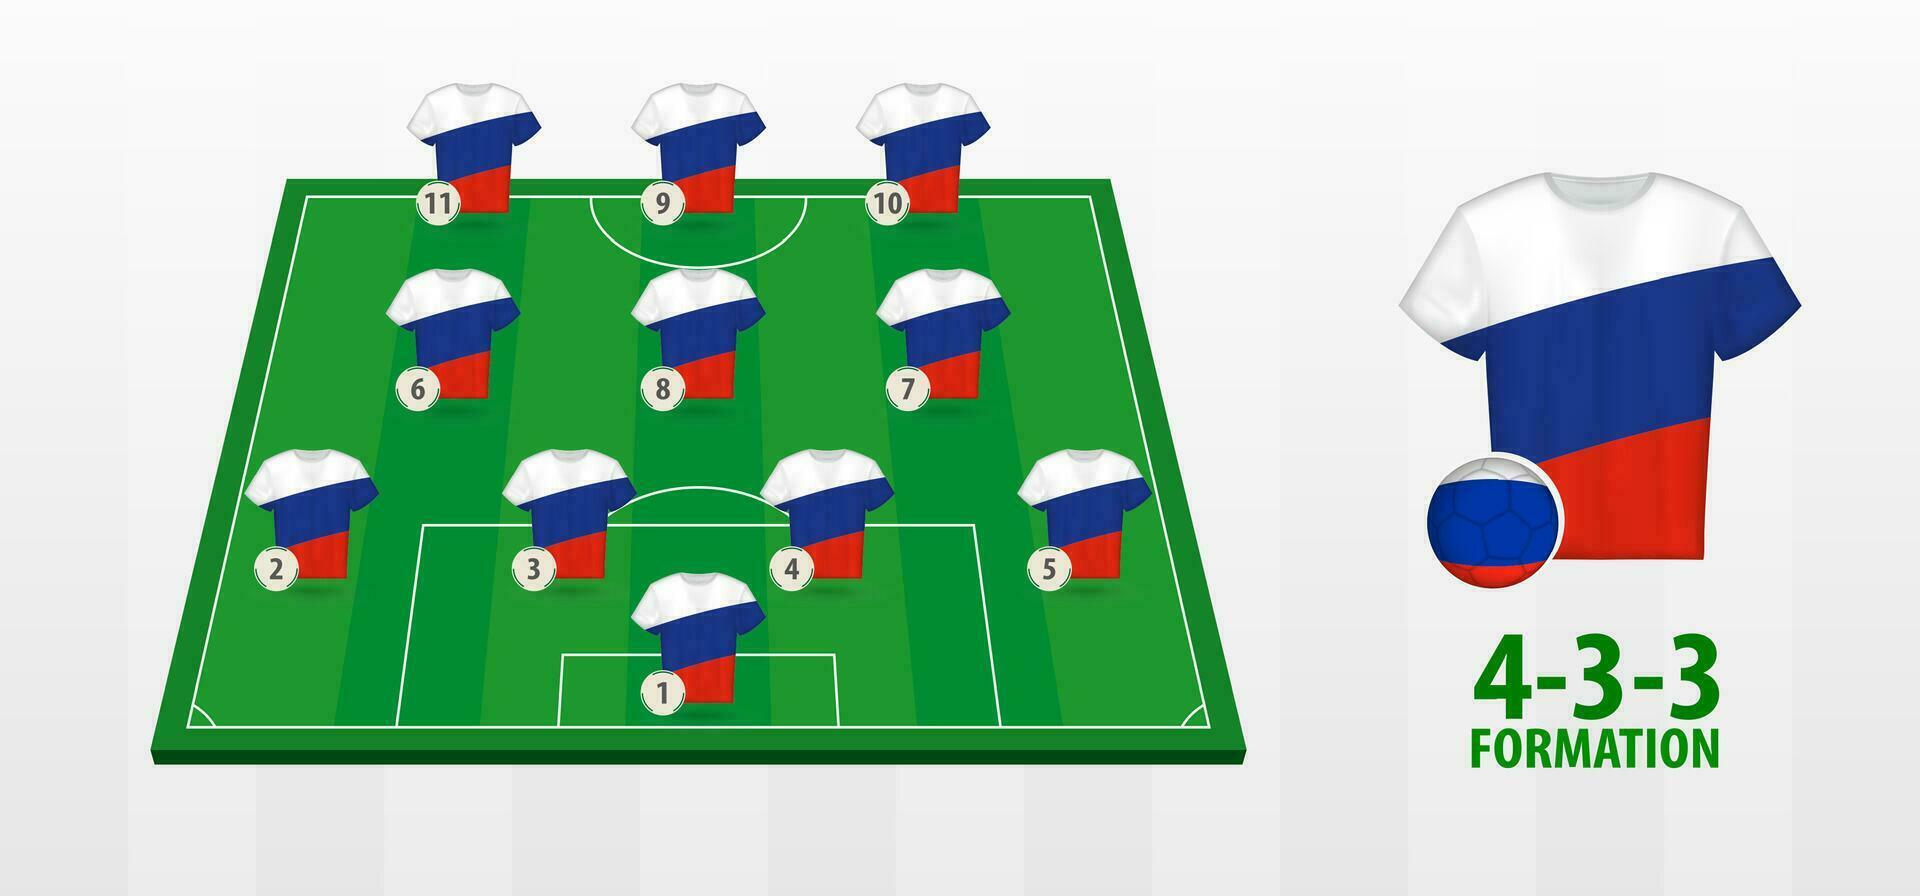 Russie nationale Football équipe formation sur Football champ. vecteur